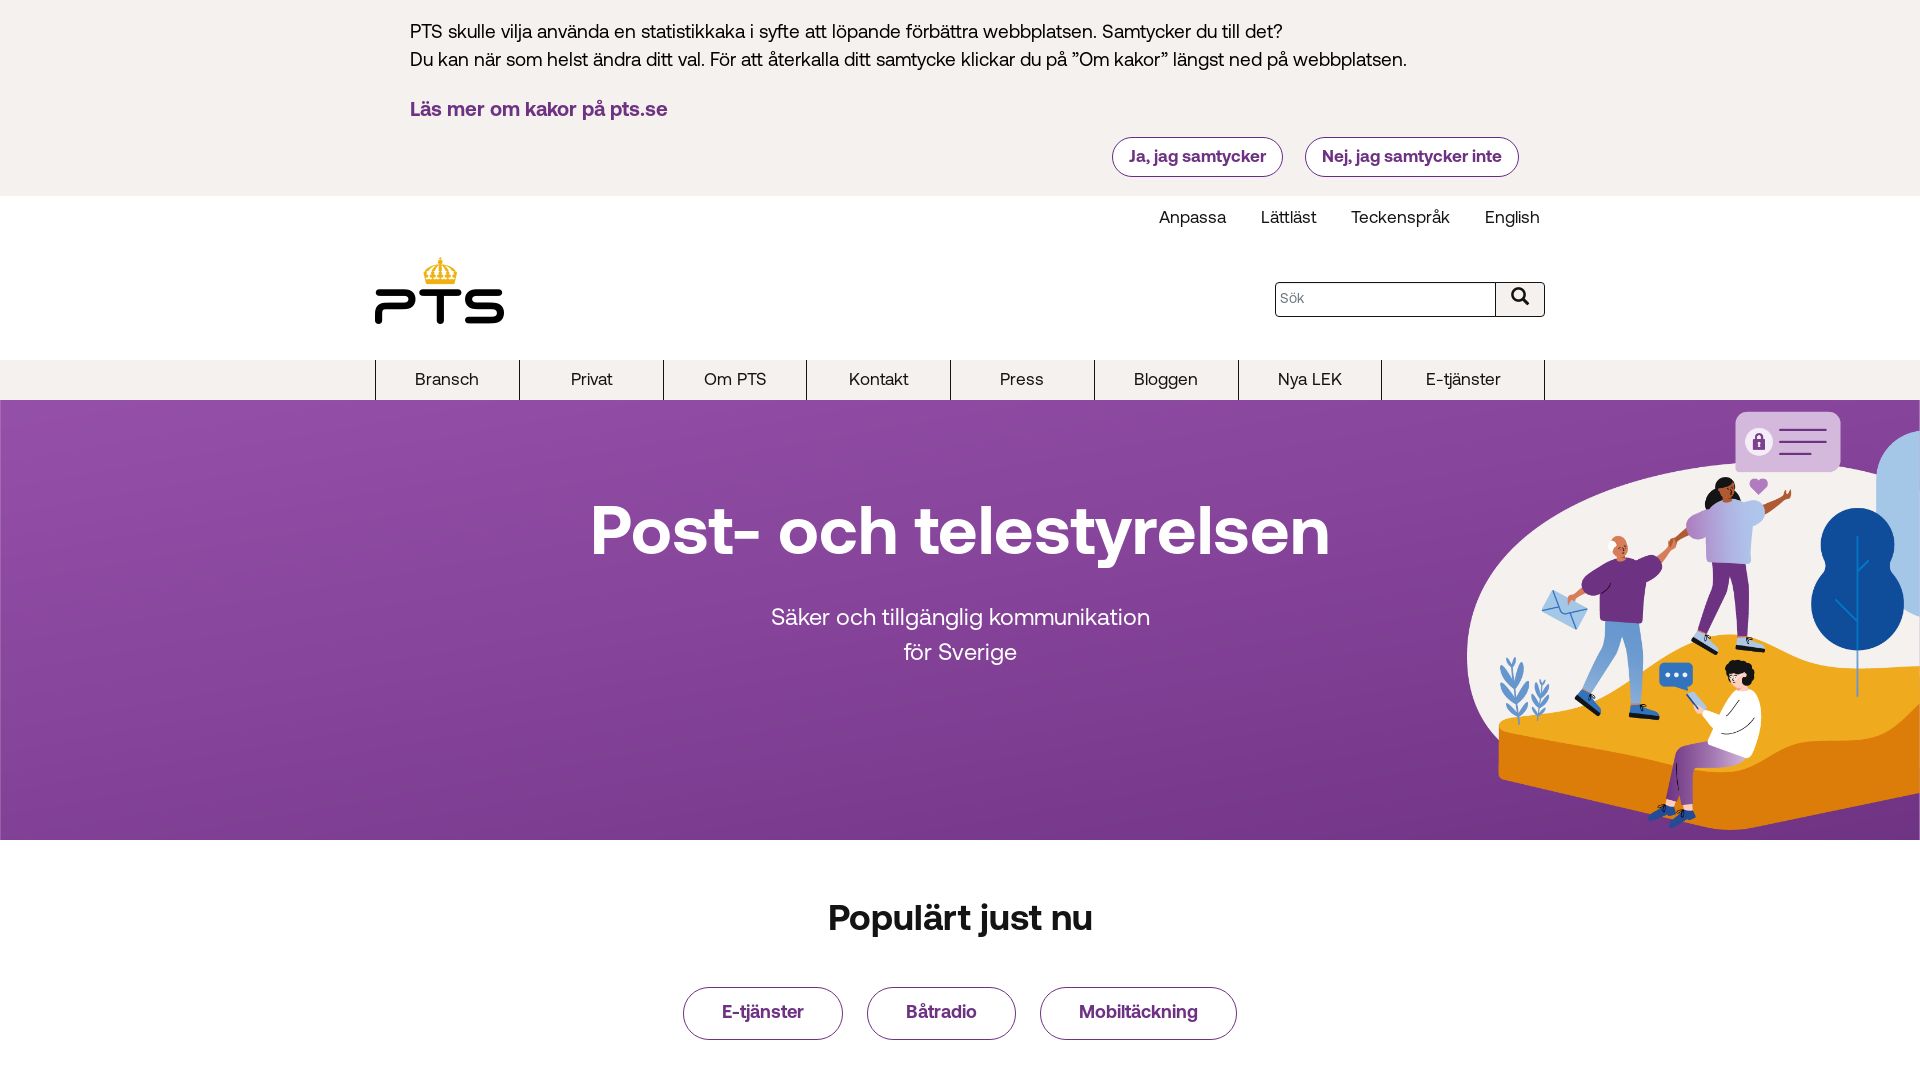 Website status pts.se is   ONLINE